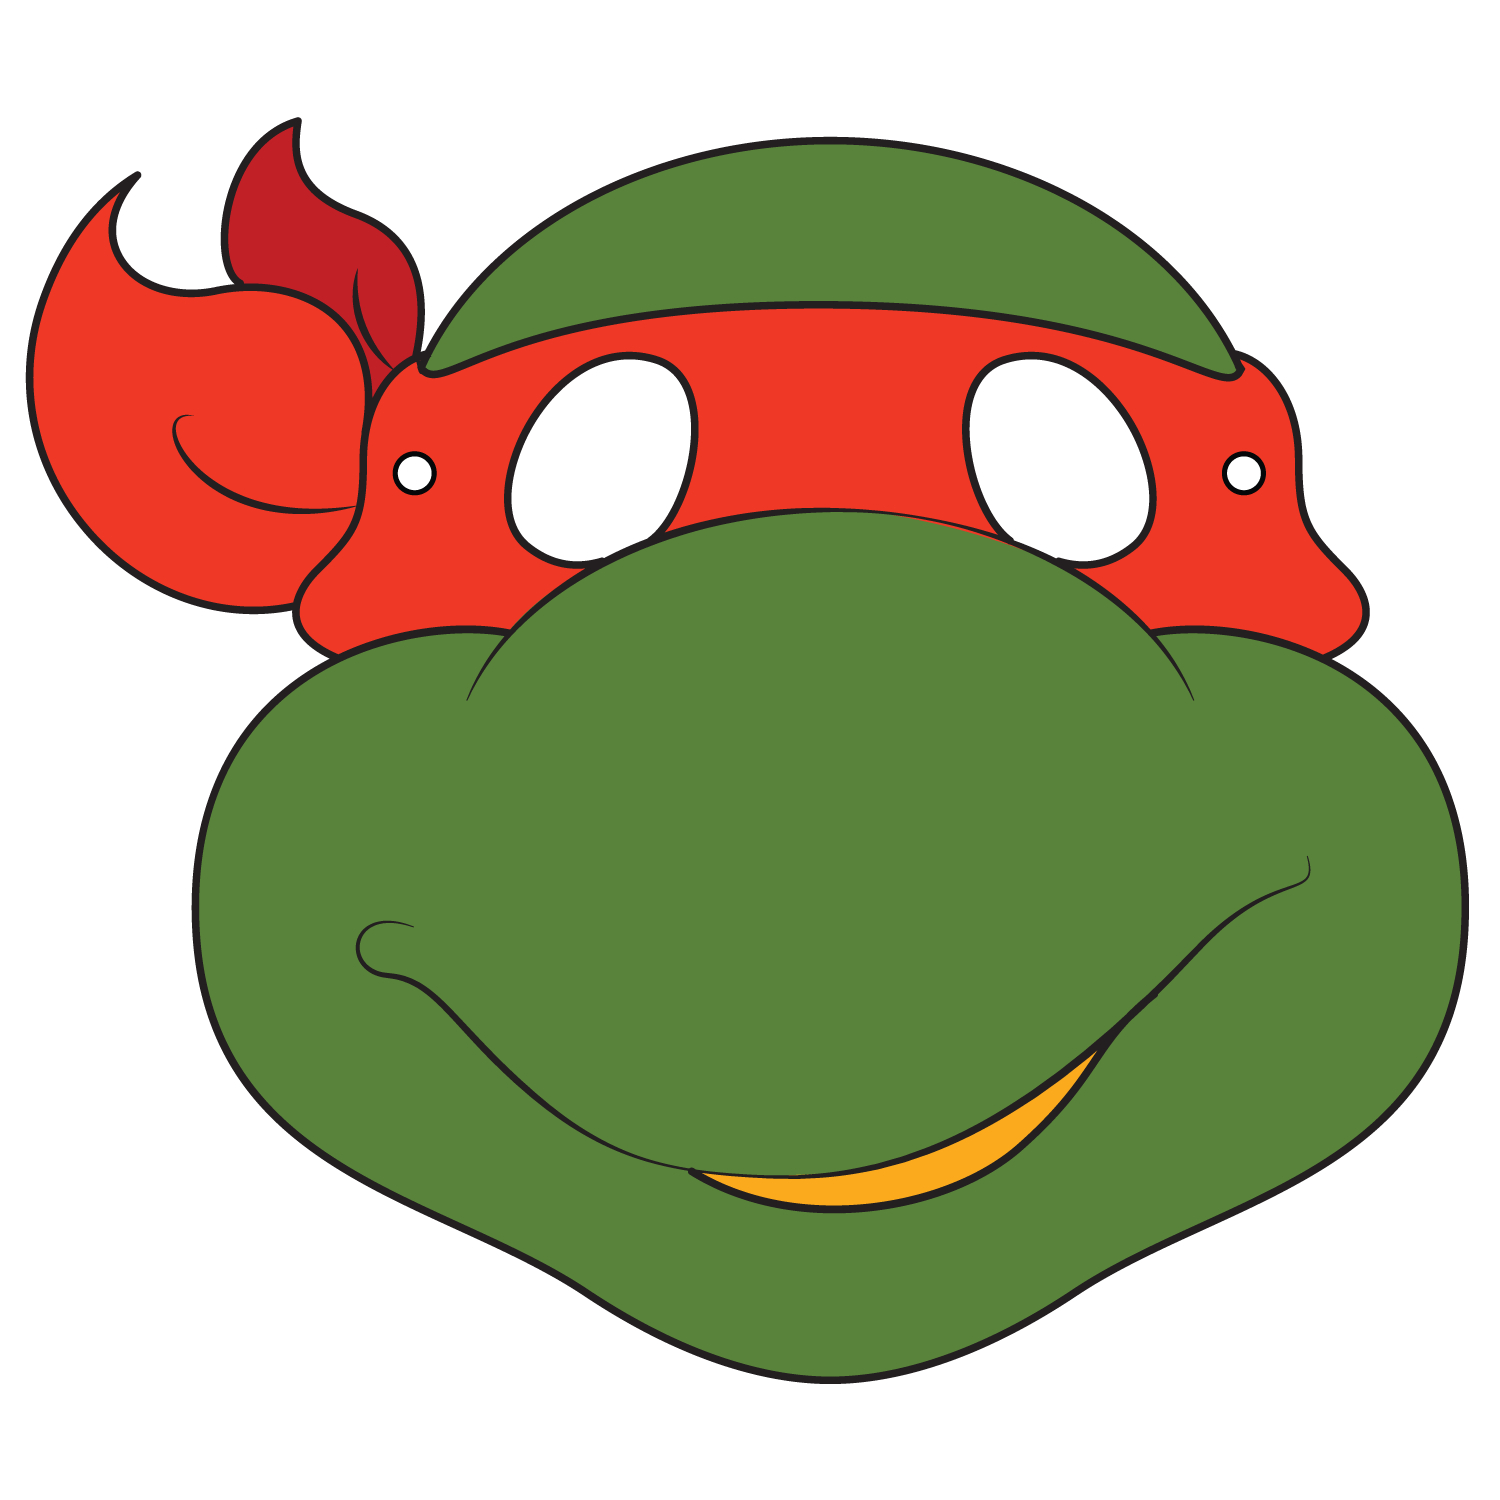 Ninja Turtle Mask Coloring Page Ninja Turtles Mask Template Free Printable Papercraft Templates